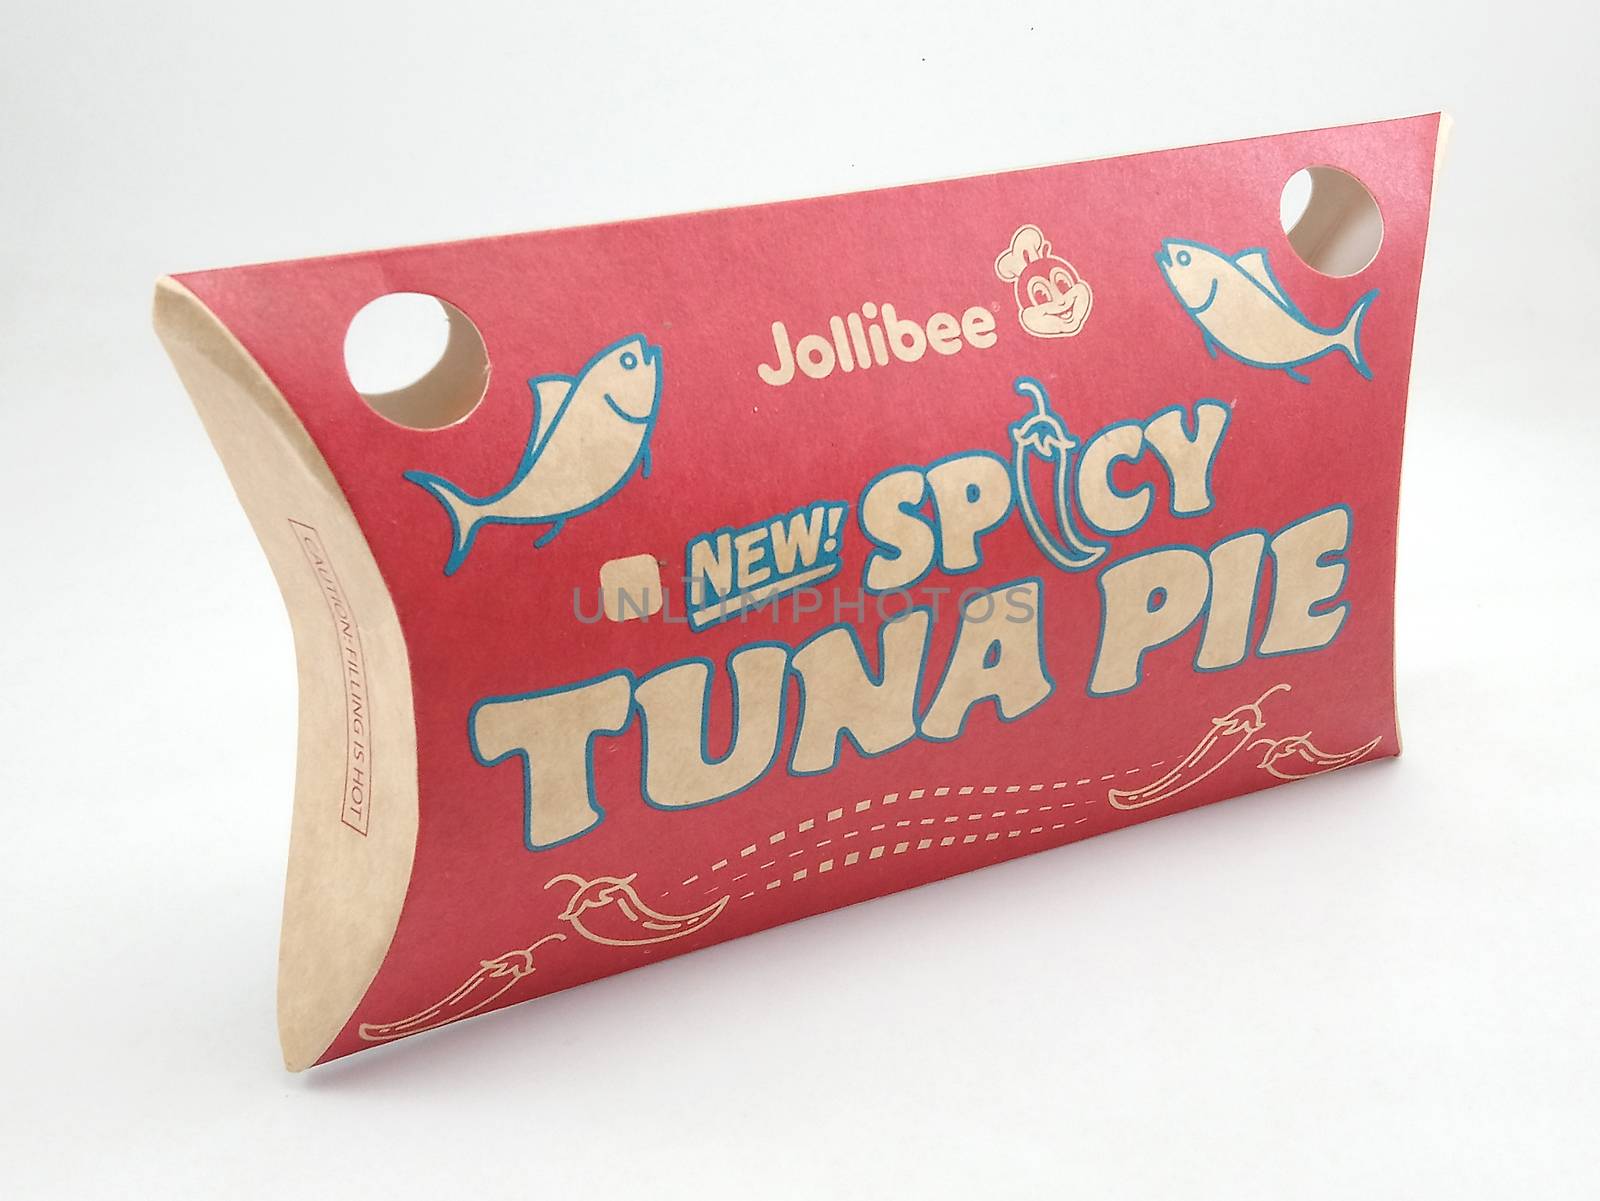 MANILA, PH - SEPT 22 - Jollibee spicy tuna pie on September 22, 2020 in Manila, Philippines.